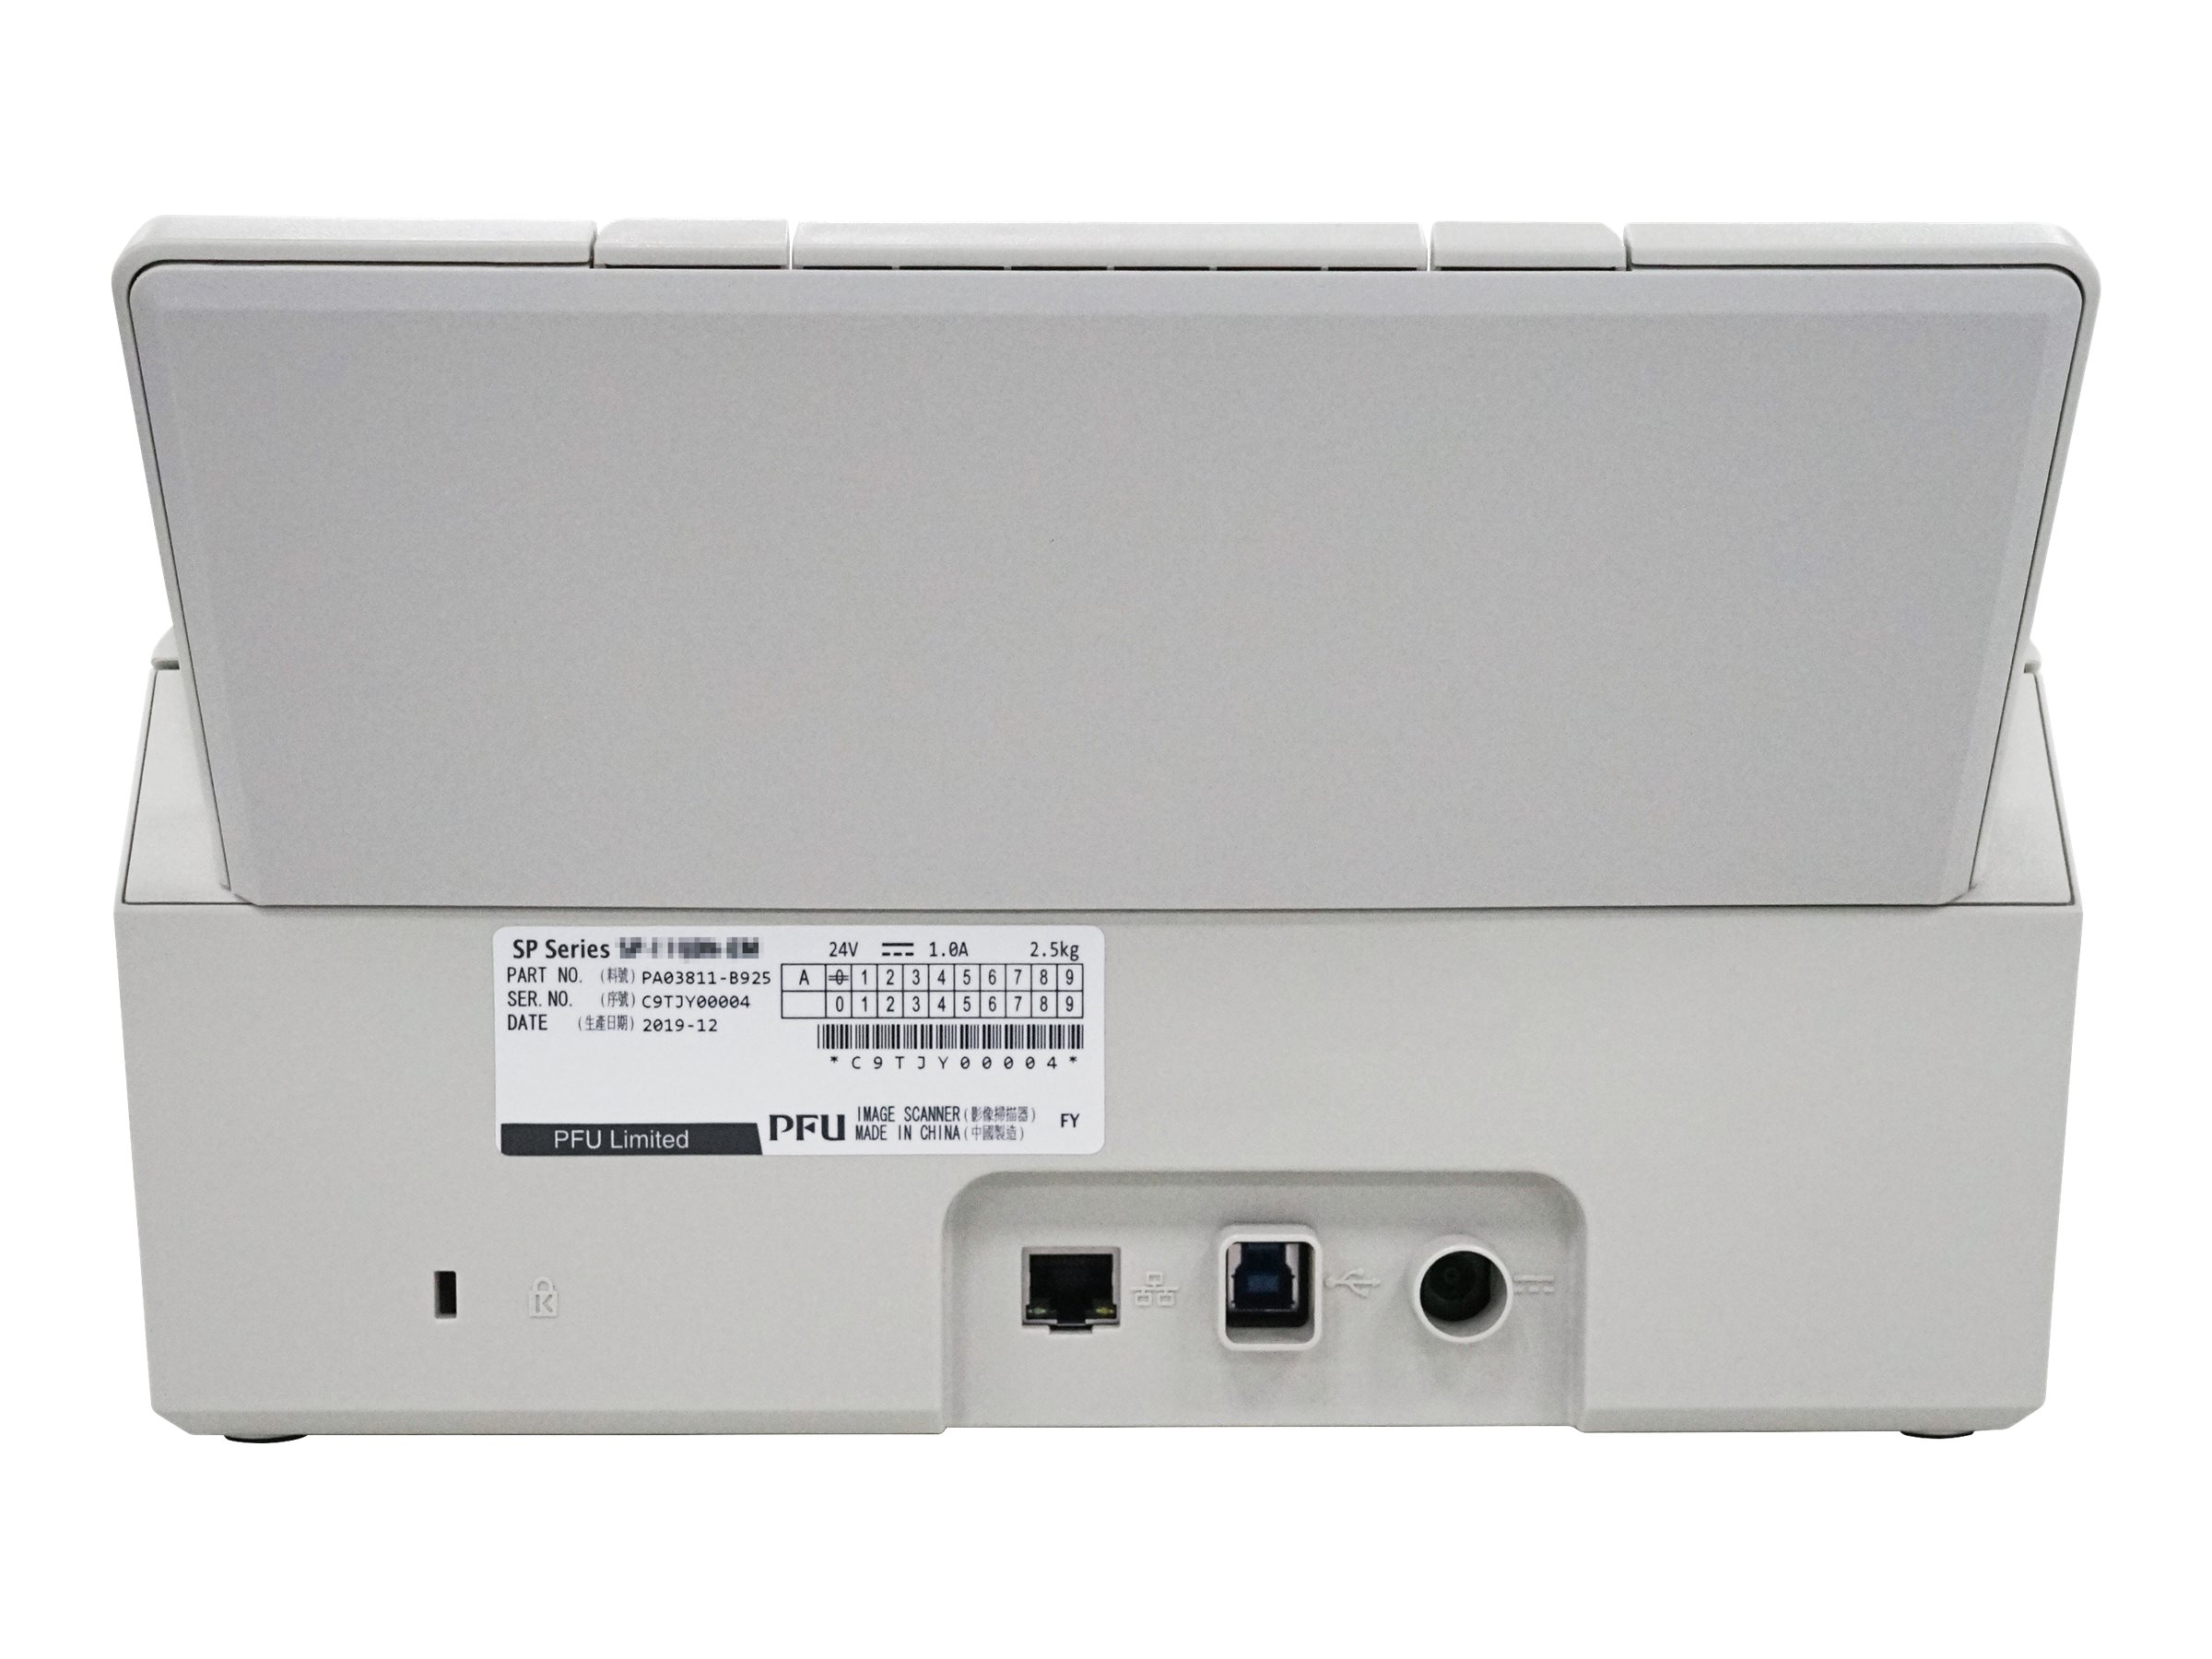 Fujitsu Ricoh SP-1120N - Dokumentenscanner - Dual CIS - Duplex - 216 x 355.6 mm - 600 dpi x 600 dpi - bis zu 20 Seiten/Min. (einfarbig)